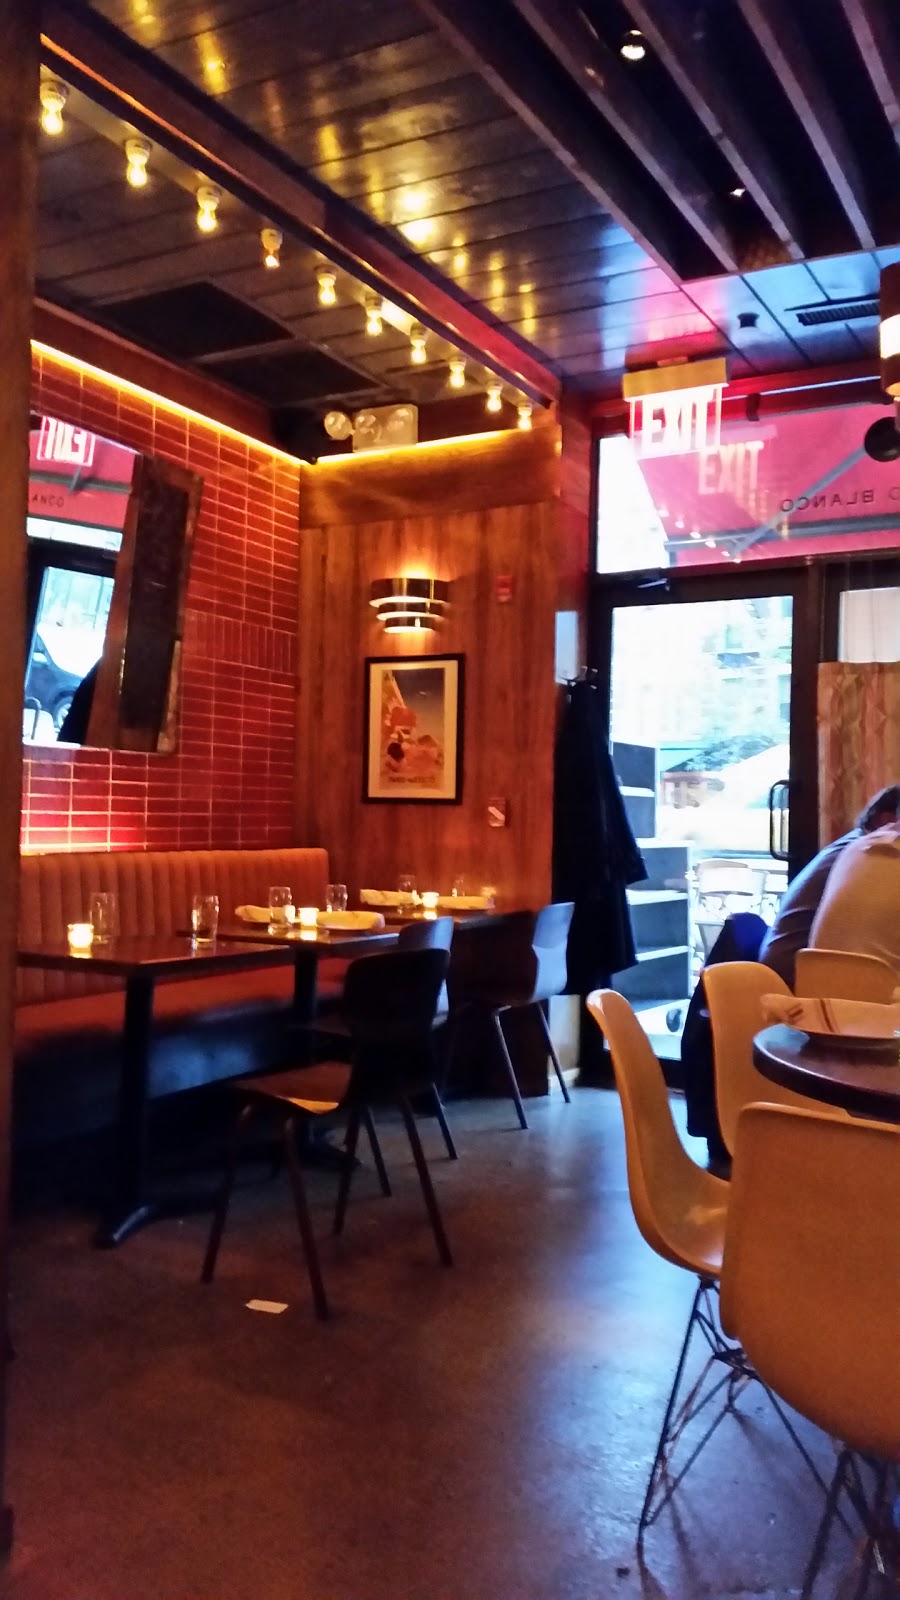 Photo of El Toro Blanco in New York City, New York, United States - 1 Picture of Restaurant, Food, Point of interest, Establishment, Bar